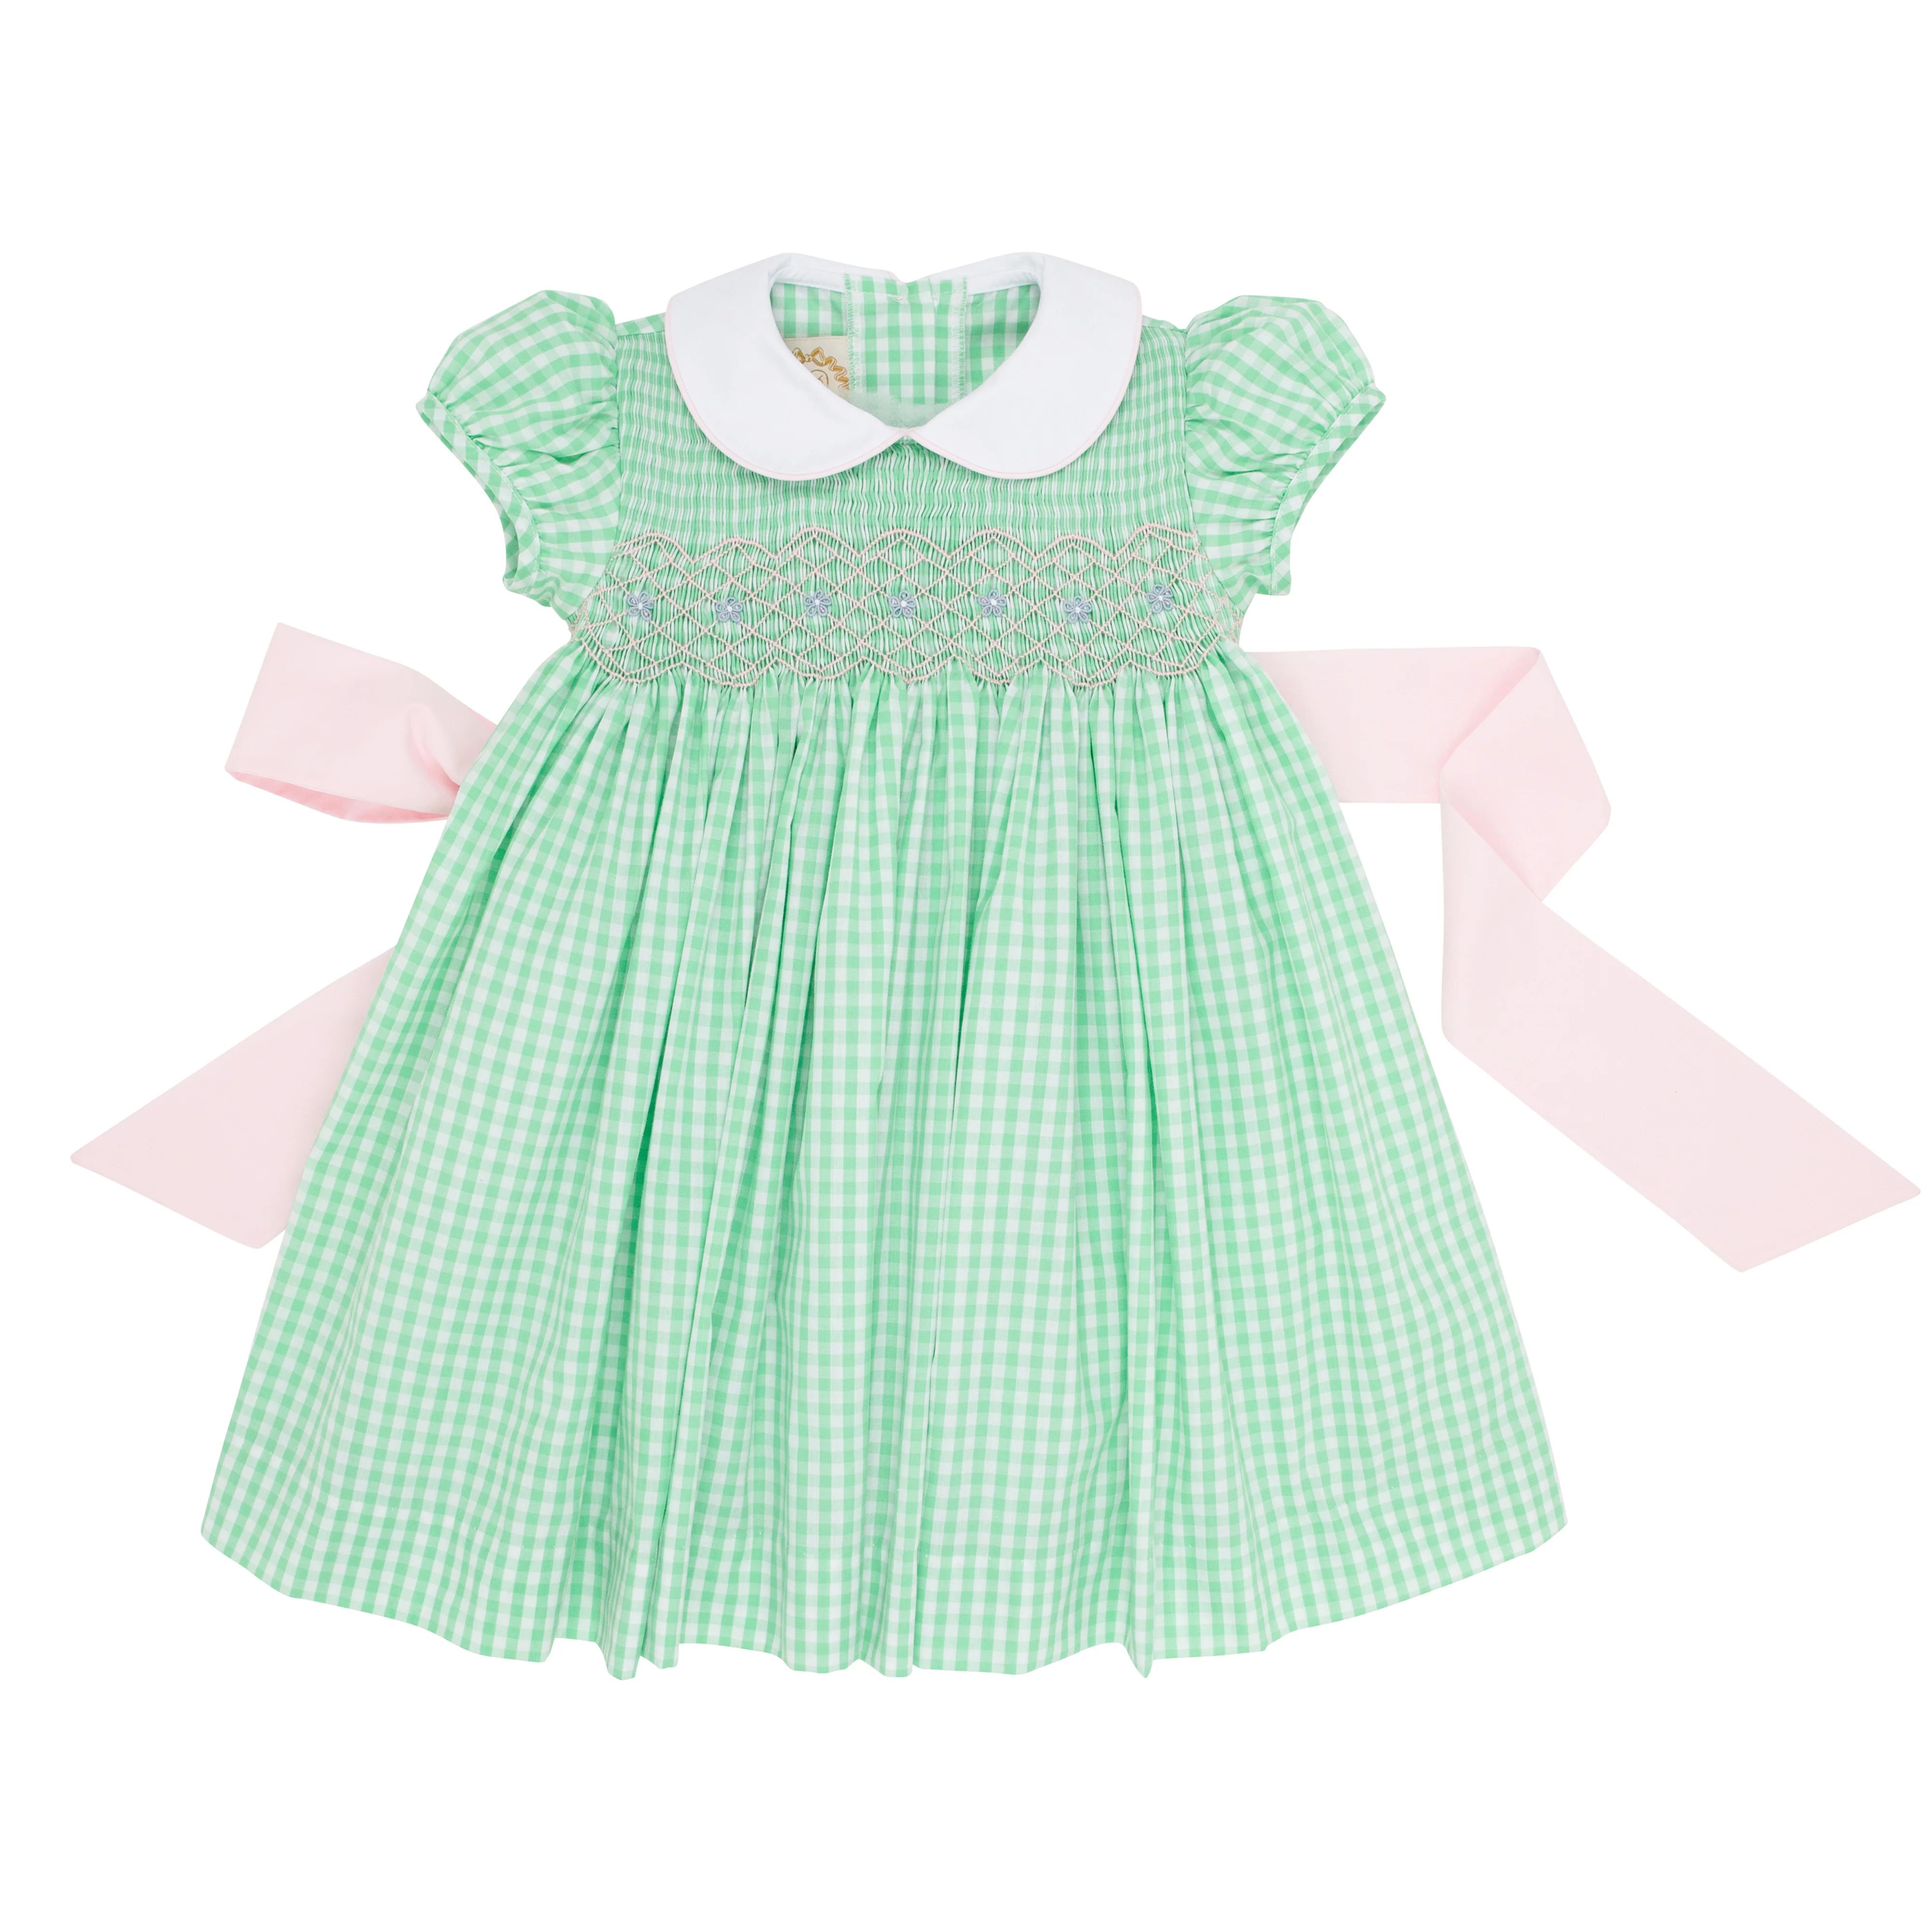 Dottie Hart Dress - Grafton Green Gingham with Palm Beach Pink Smocking | The Beaufort Bonnet Company